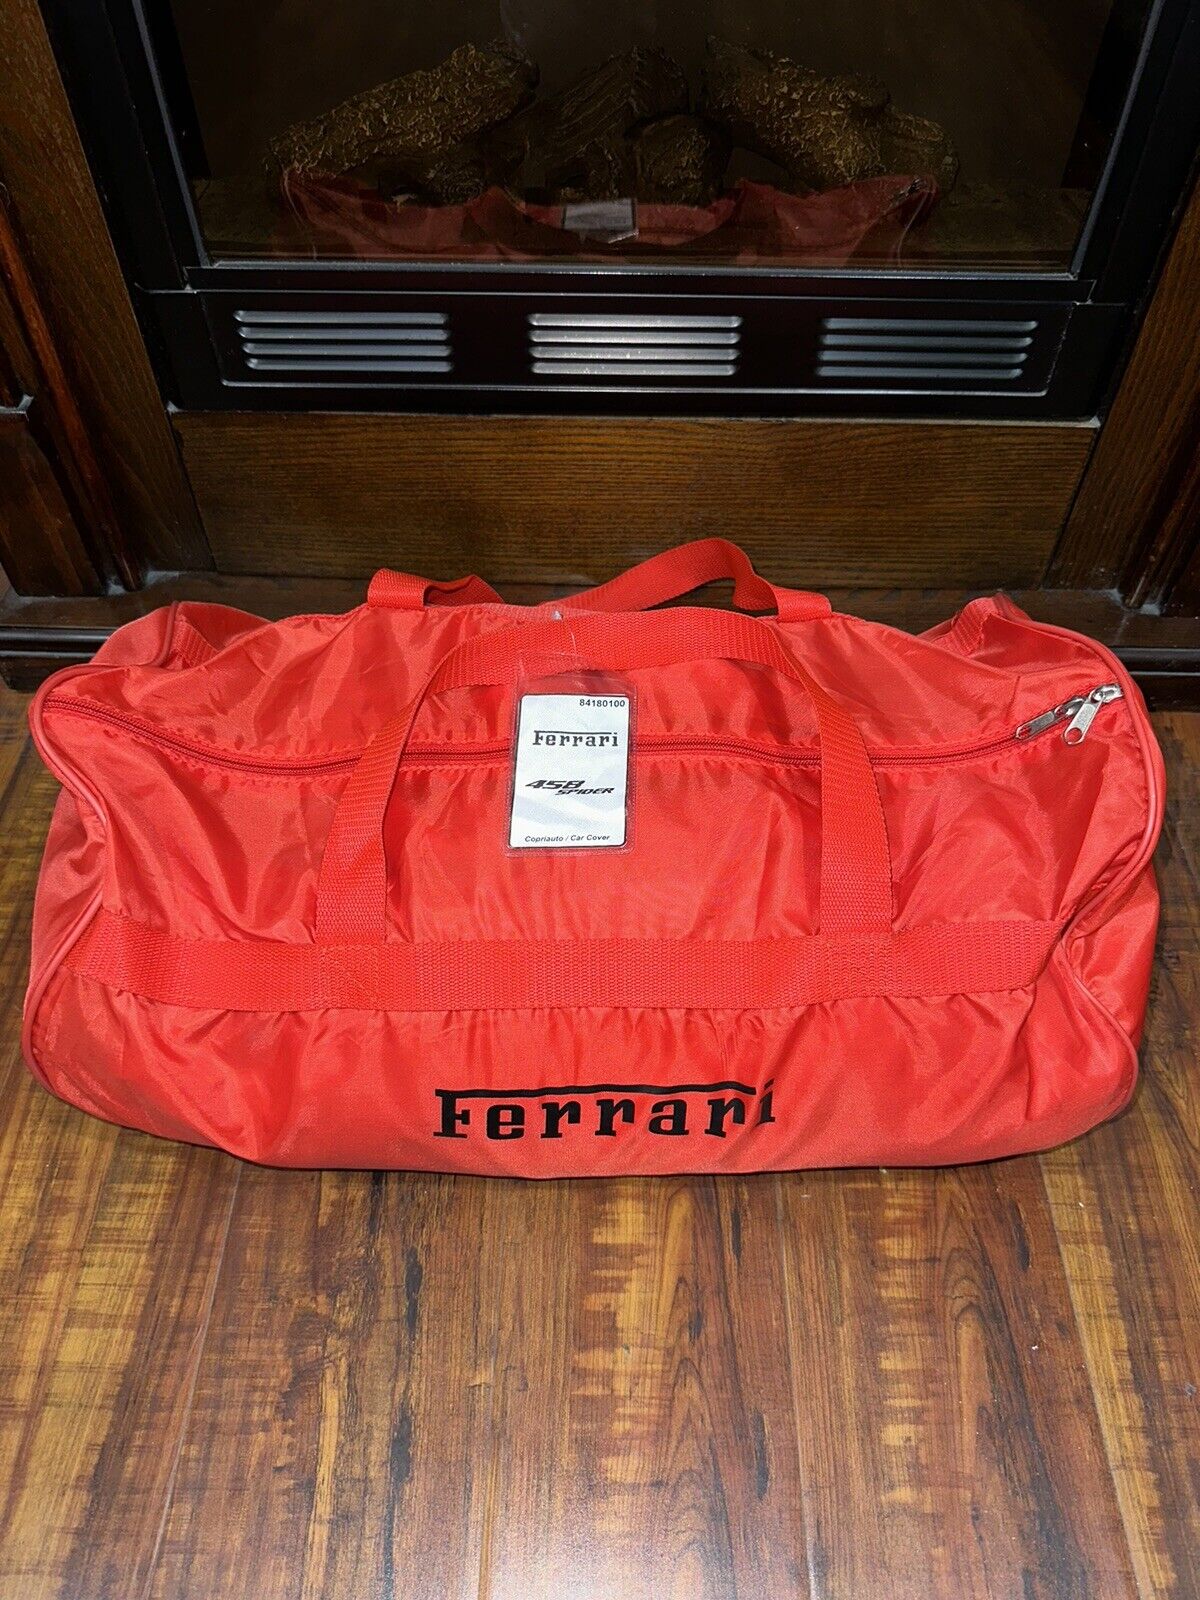 Ferrari 458 Spider Indoor Red Genuine OEM Car Cover with Bag 84180100 *NEW*